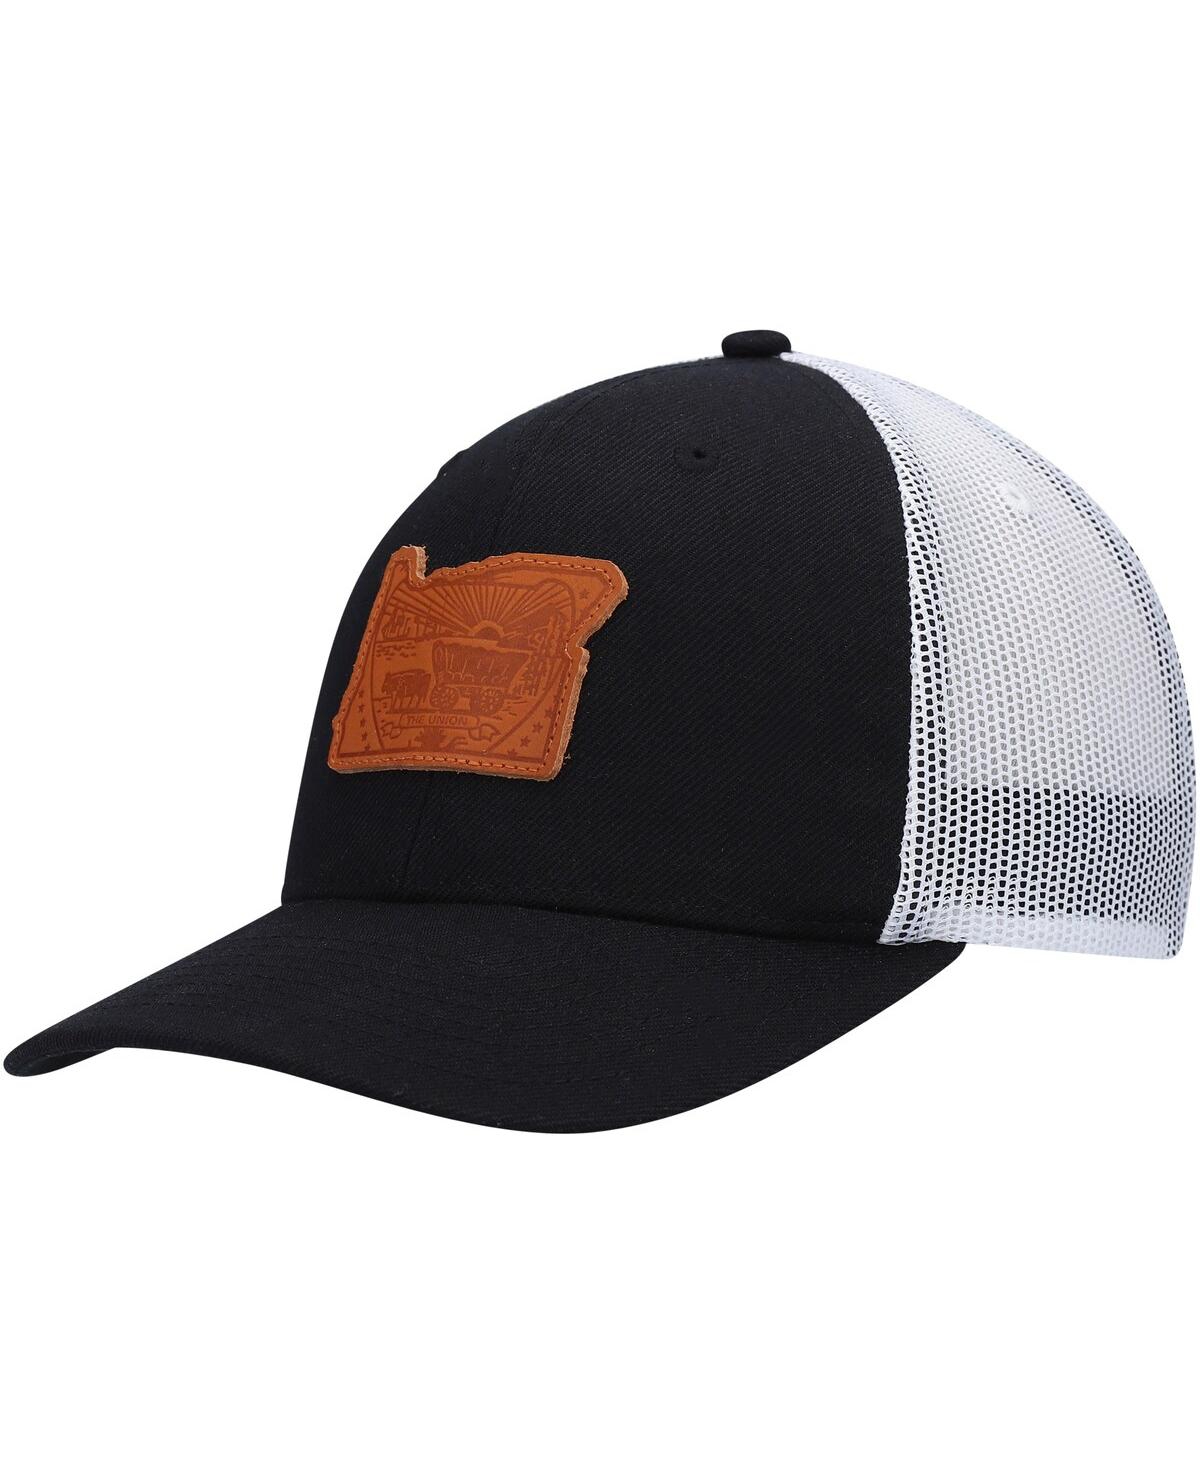 Shop Local Crowns Men's  Black Oregon Leather State Applique Trucker Snapback Hat